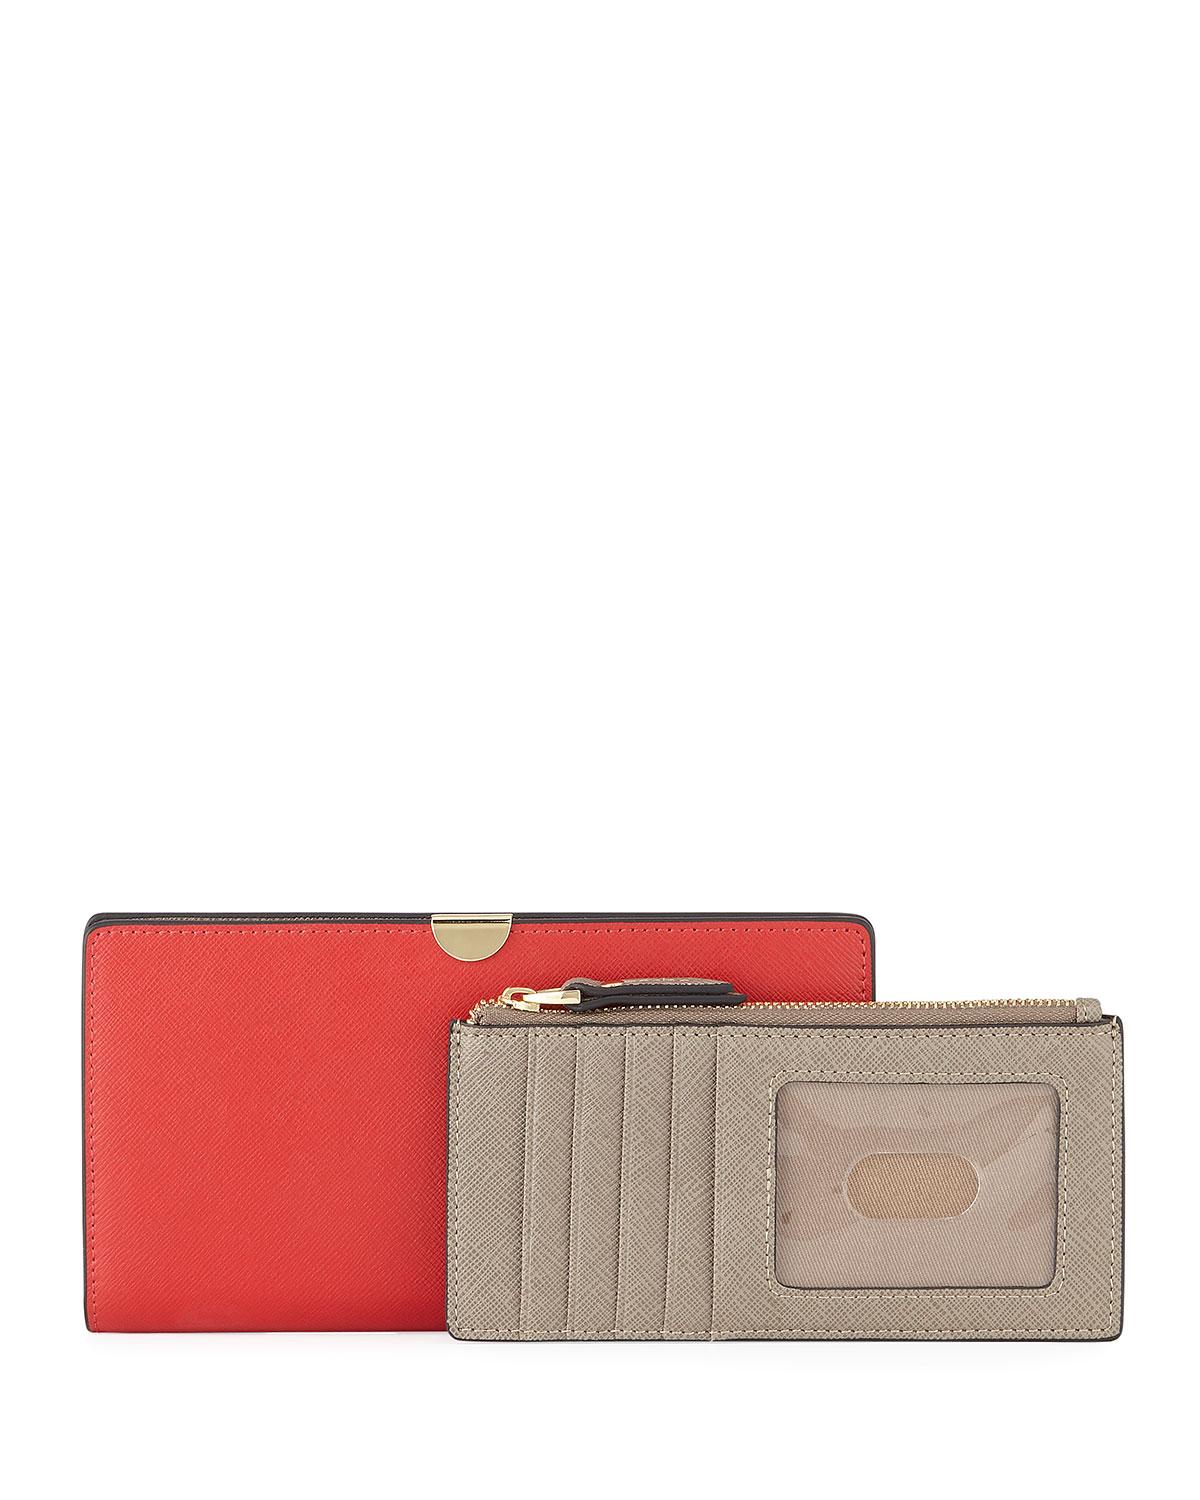 Lyst - Neiman Marcus Saffiano Leather Bi-fold Wallet